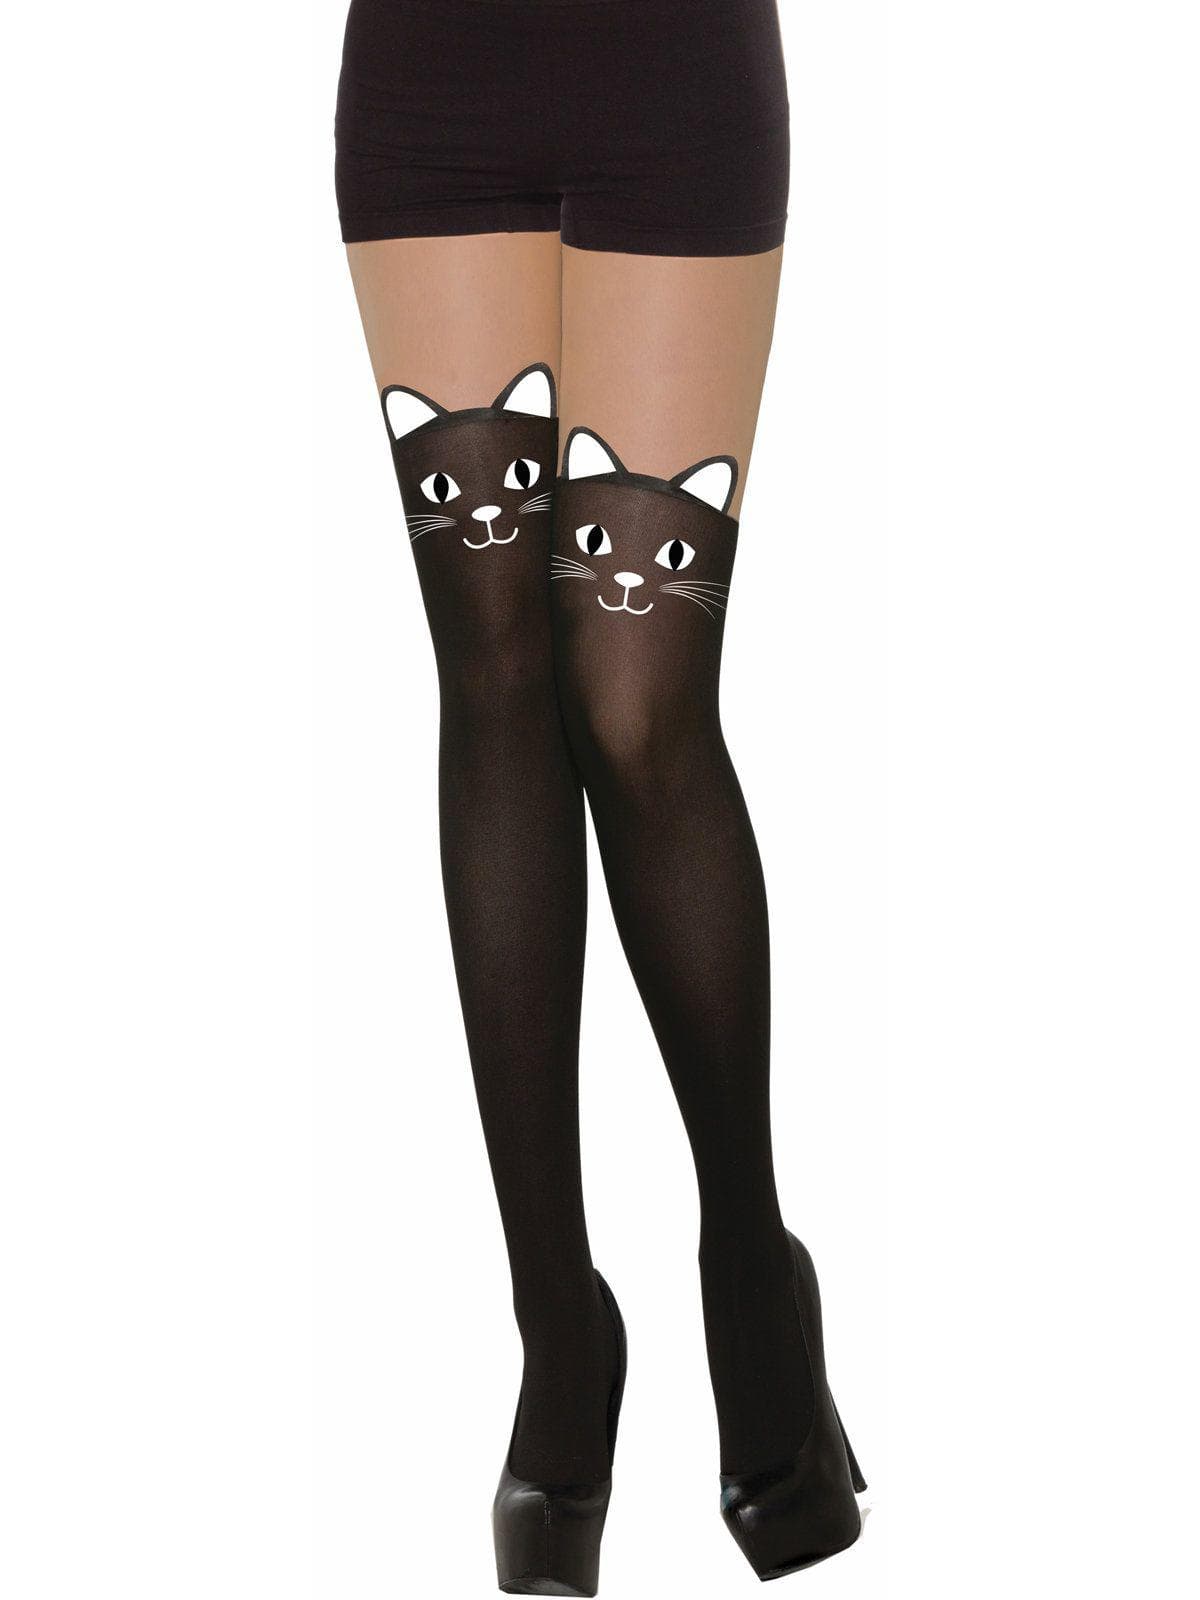 Black Cat Stockings Standard - costumes.com